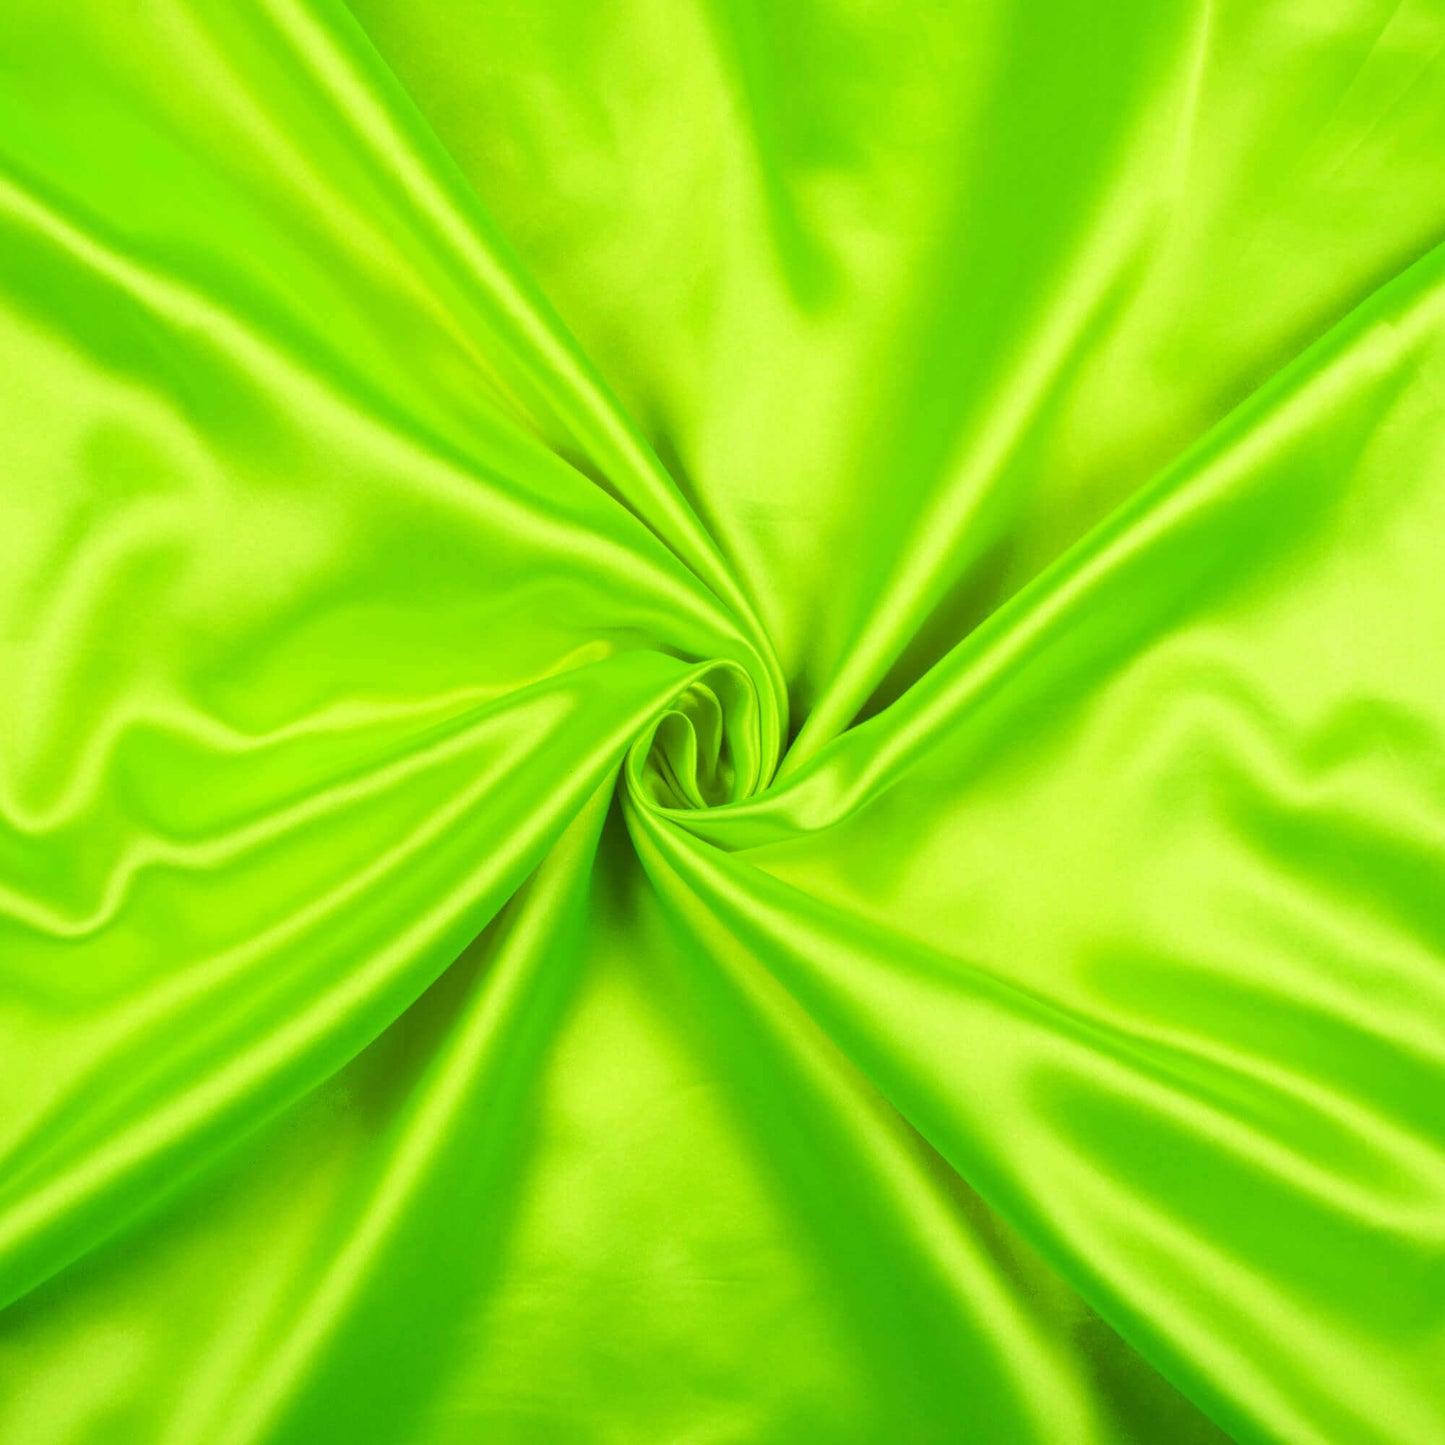 Electric Lime Green Plain Neon Ultra Satin Fabric